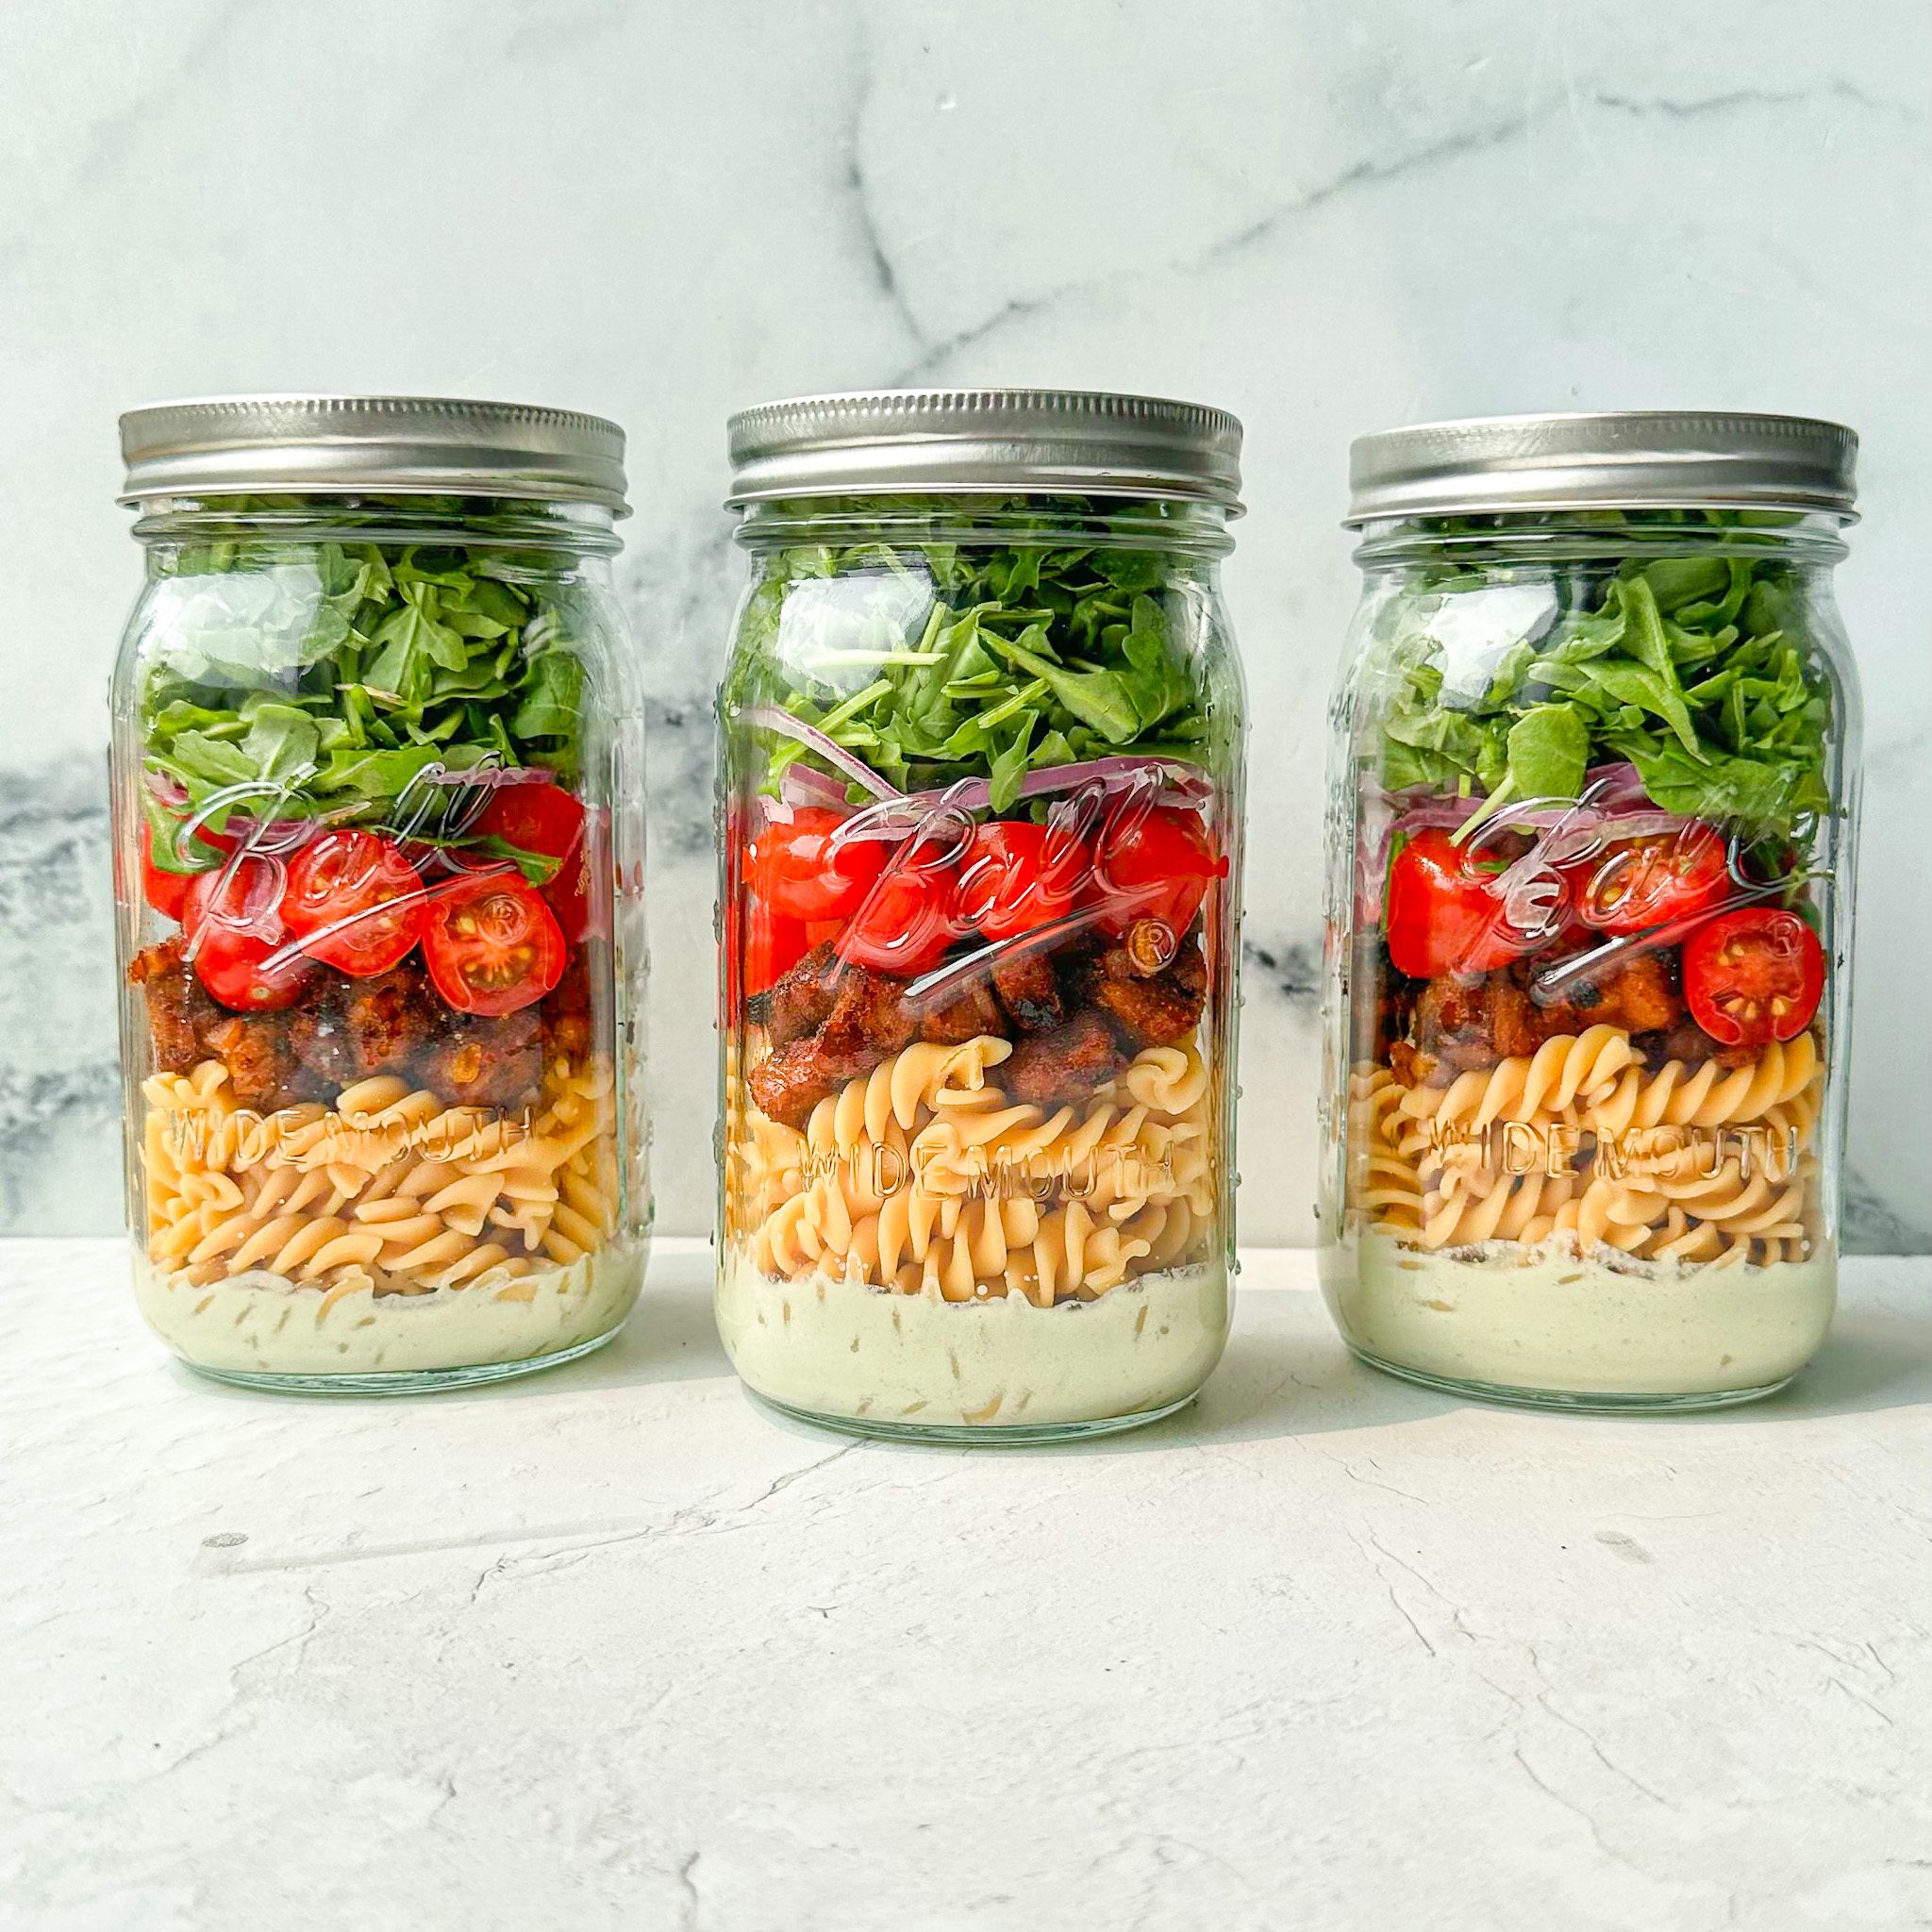 BLT Pasta Salad Jars - That Vegan Babe